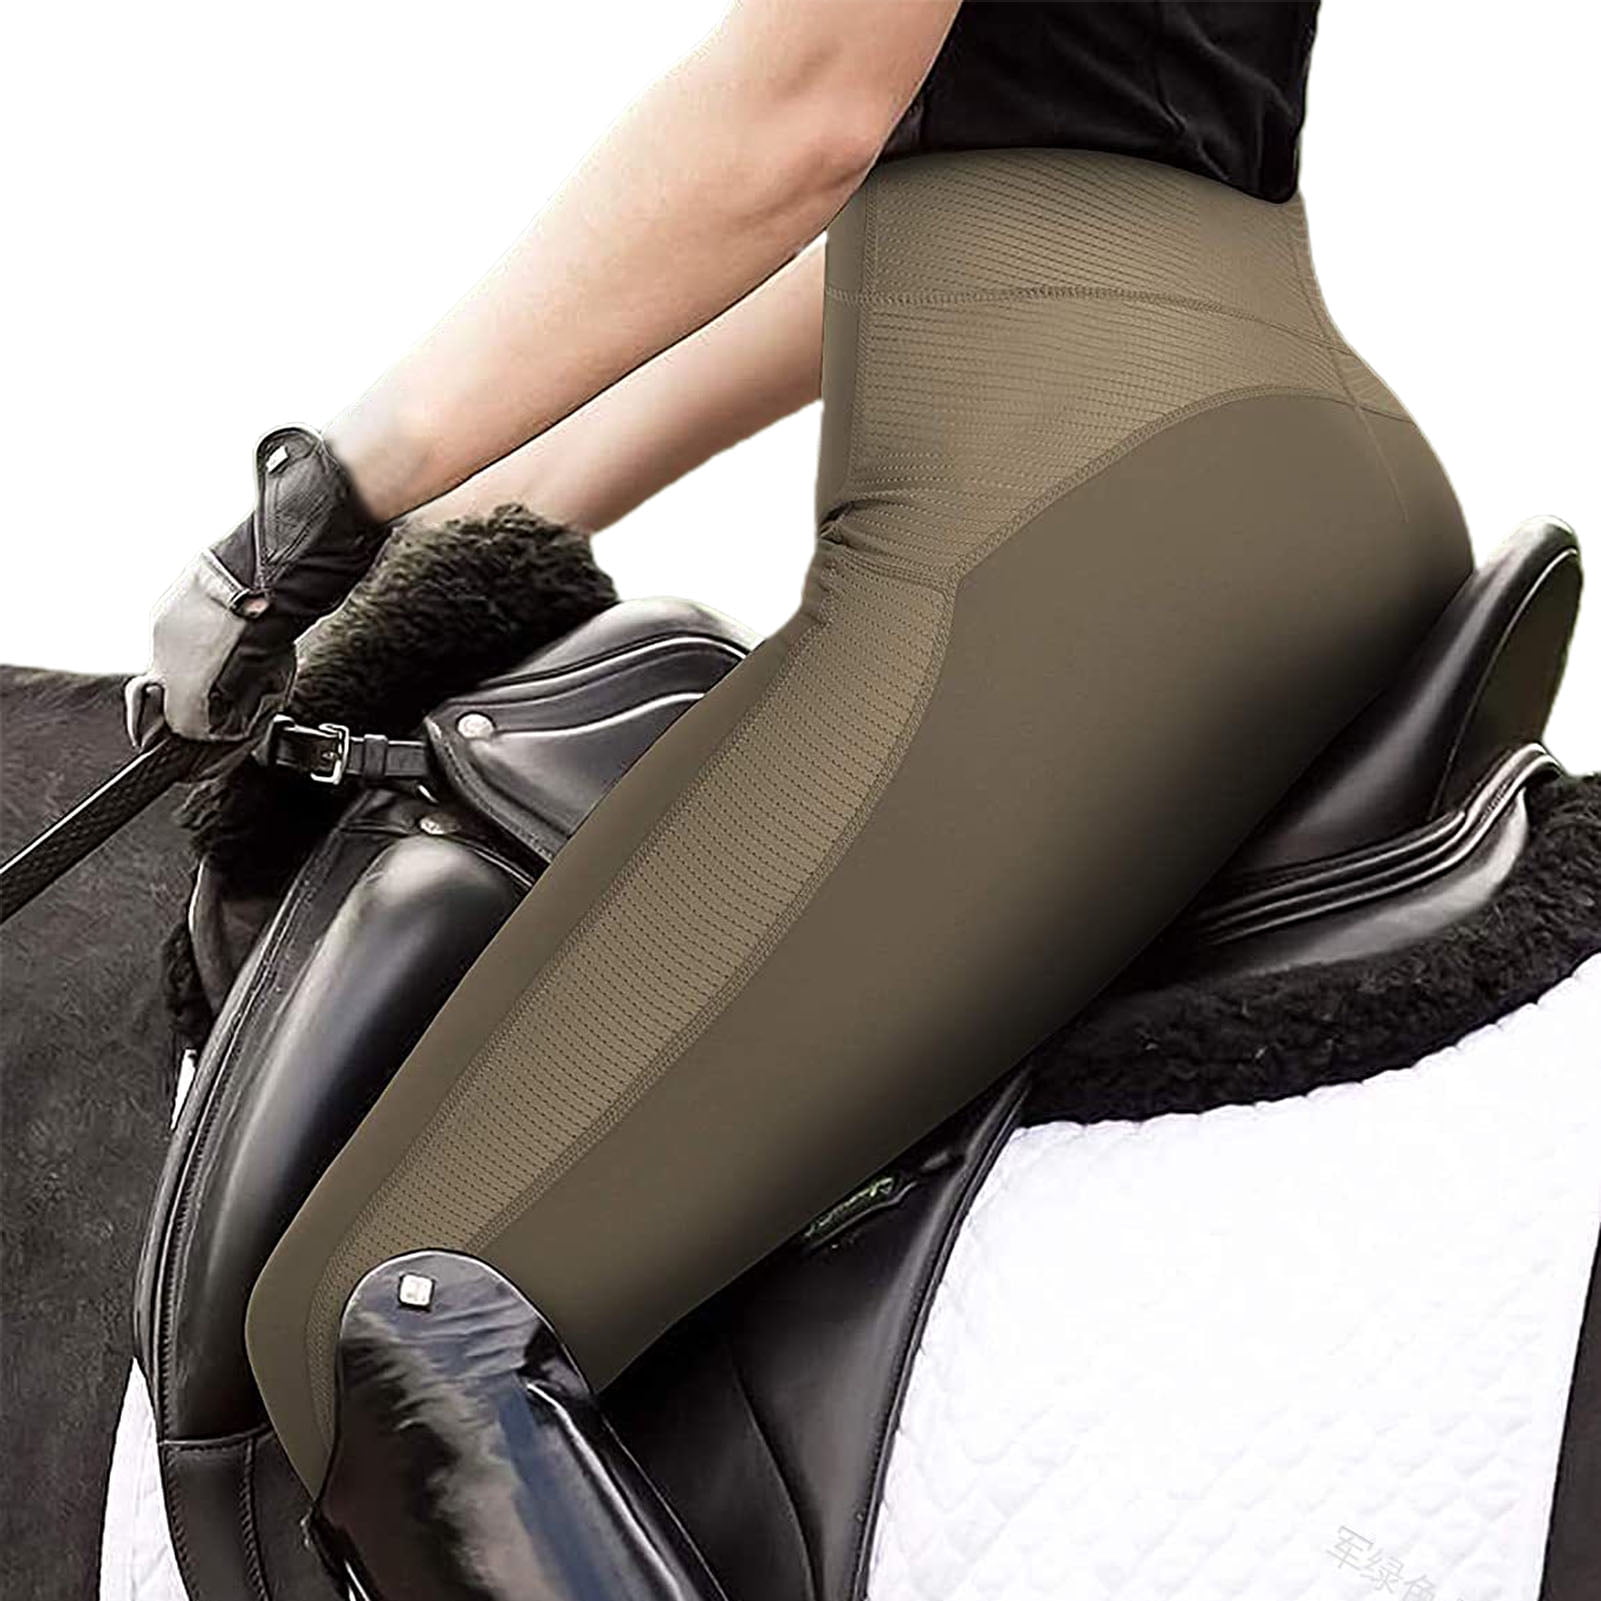 Women's Horse Riding Pants High Waist Equestrian Breeches Tights Zipper Pockets Yoga Sports Active Legging 